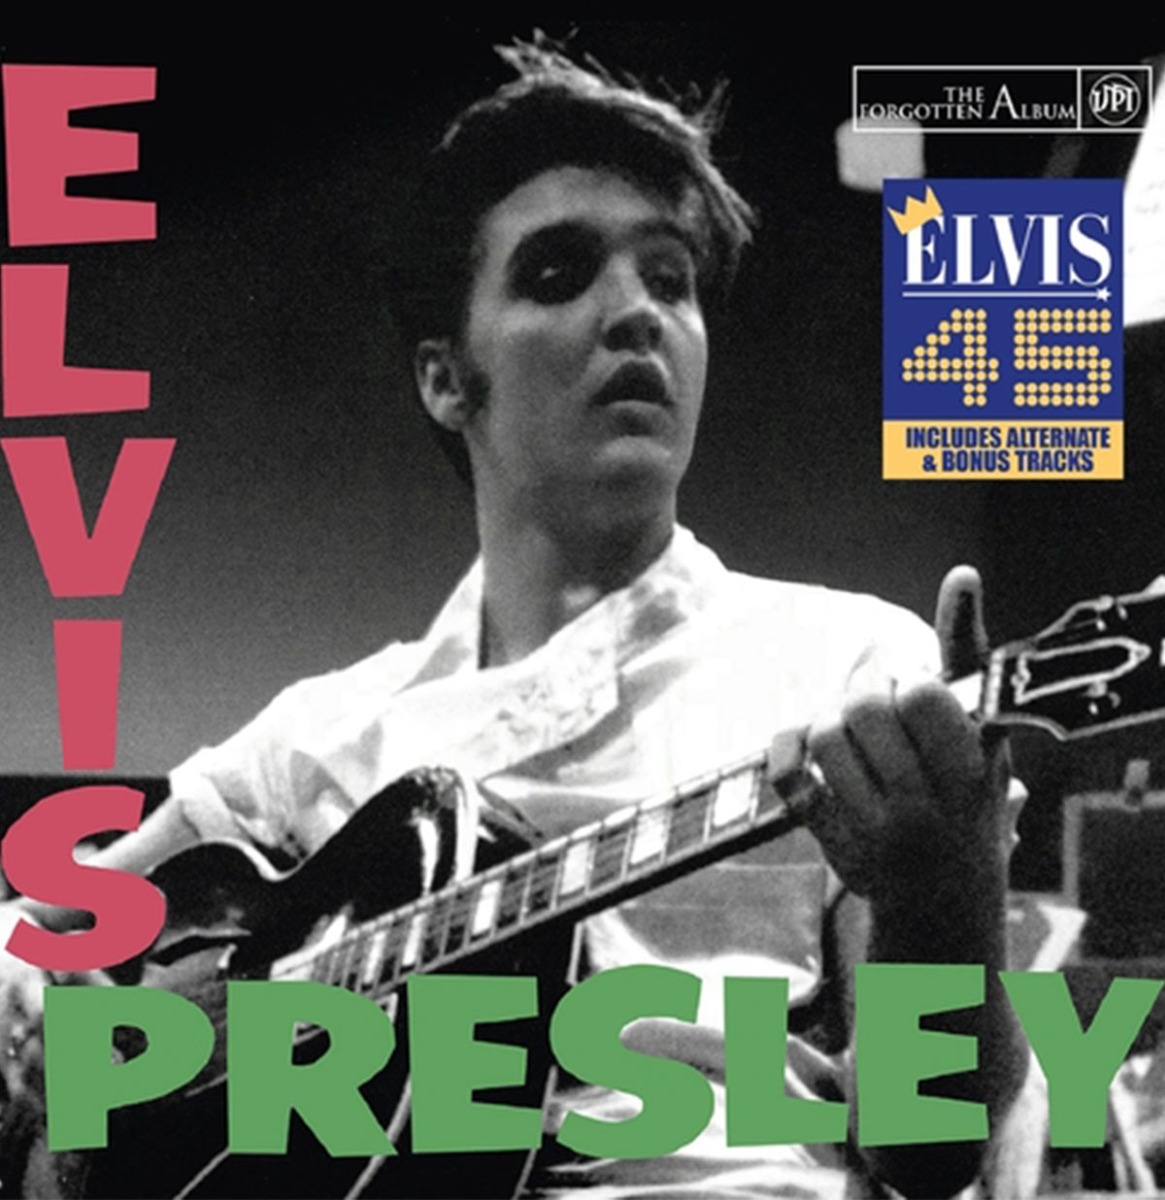 Elvis Presley - The Forgotten Album CD